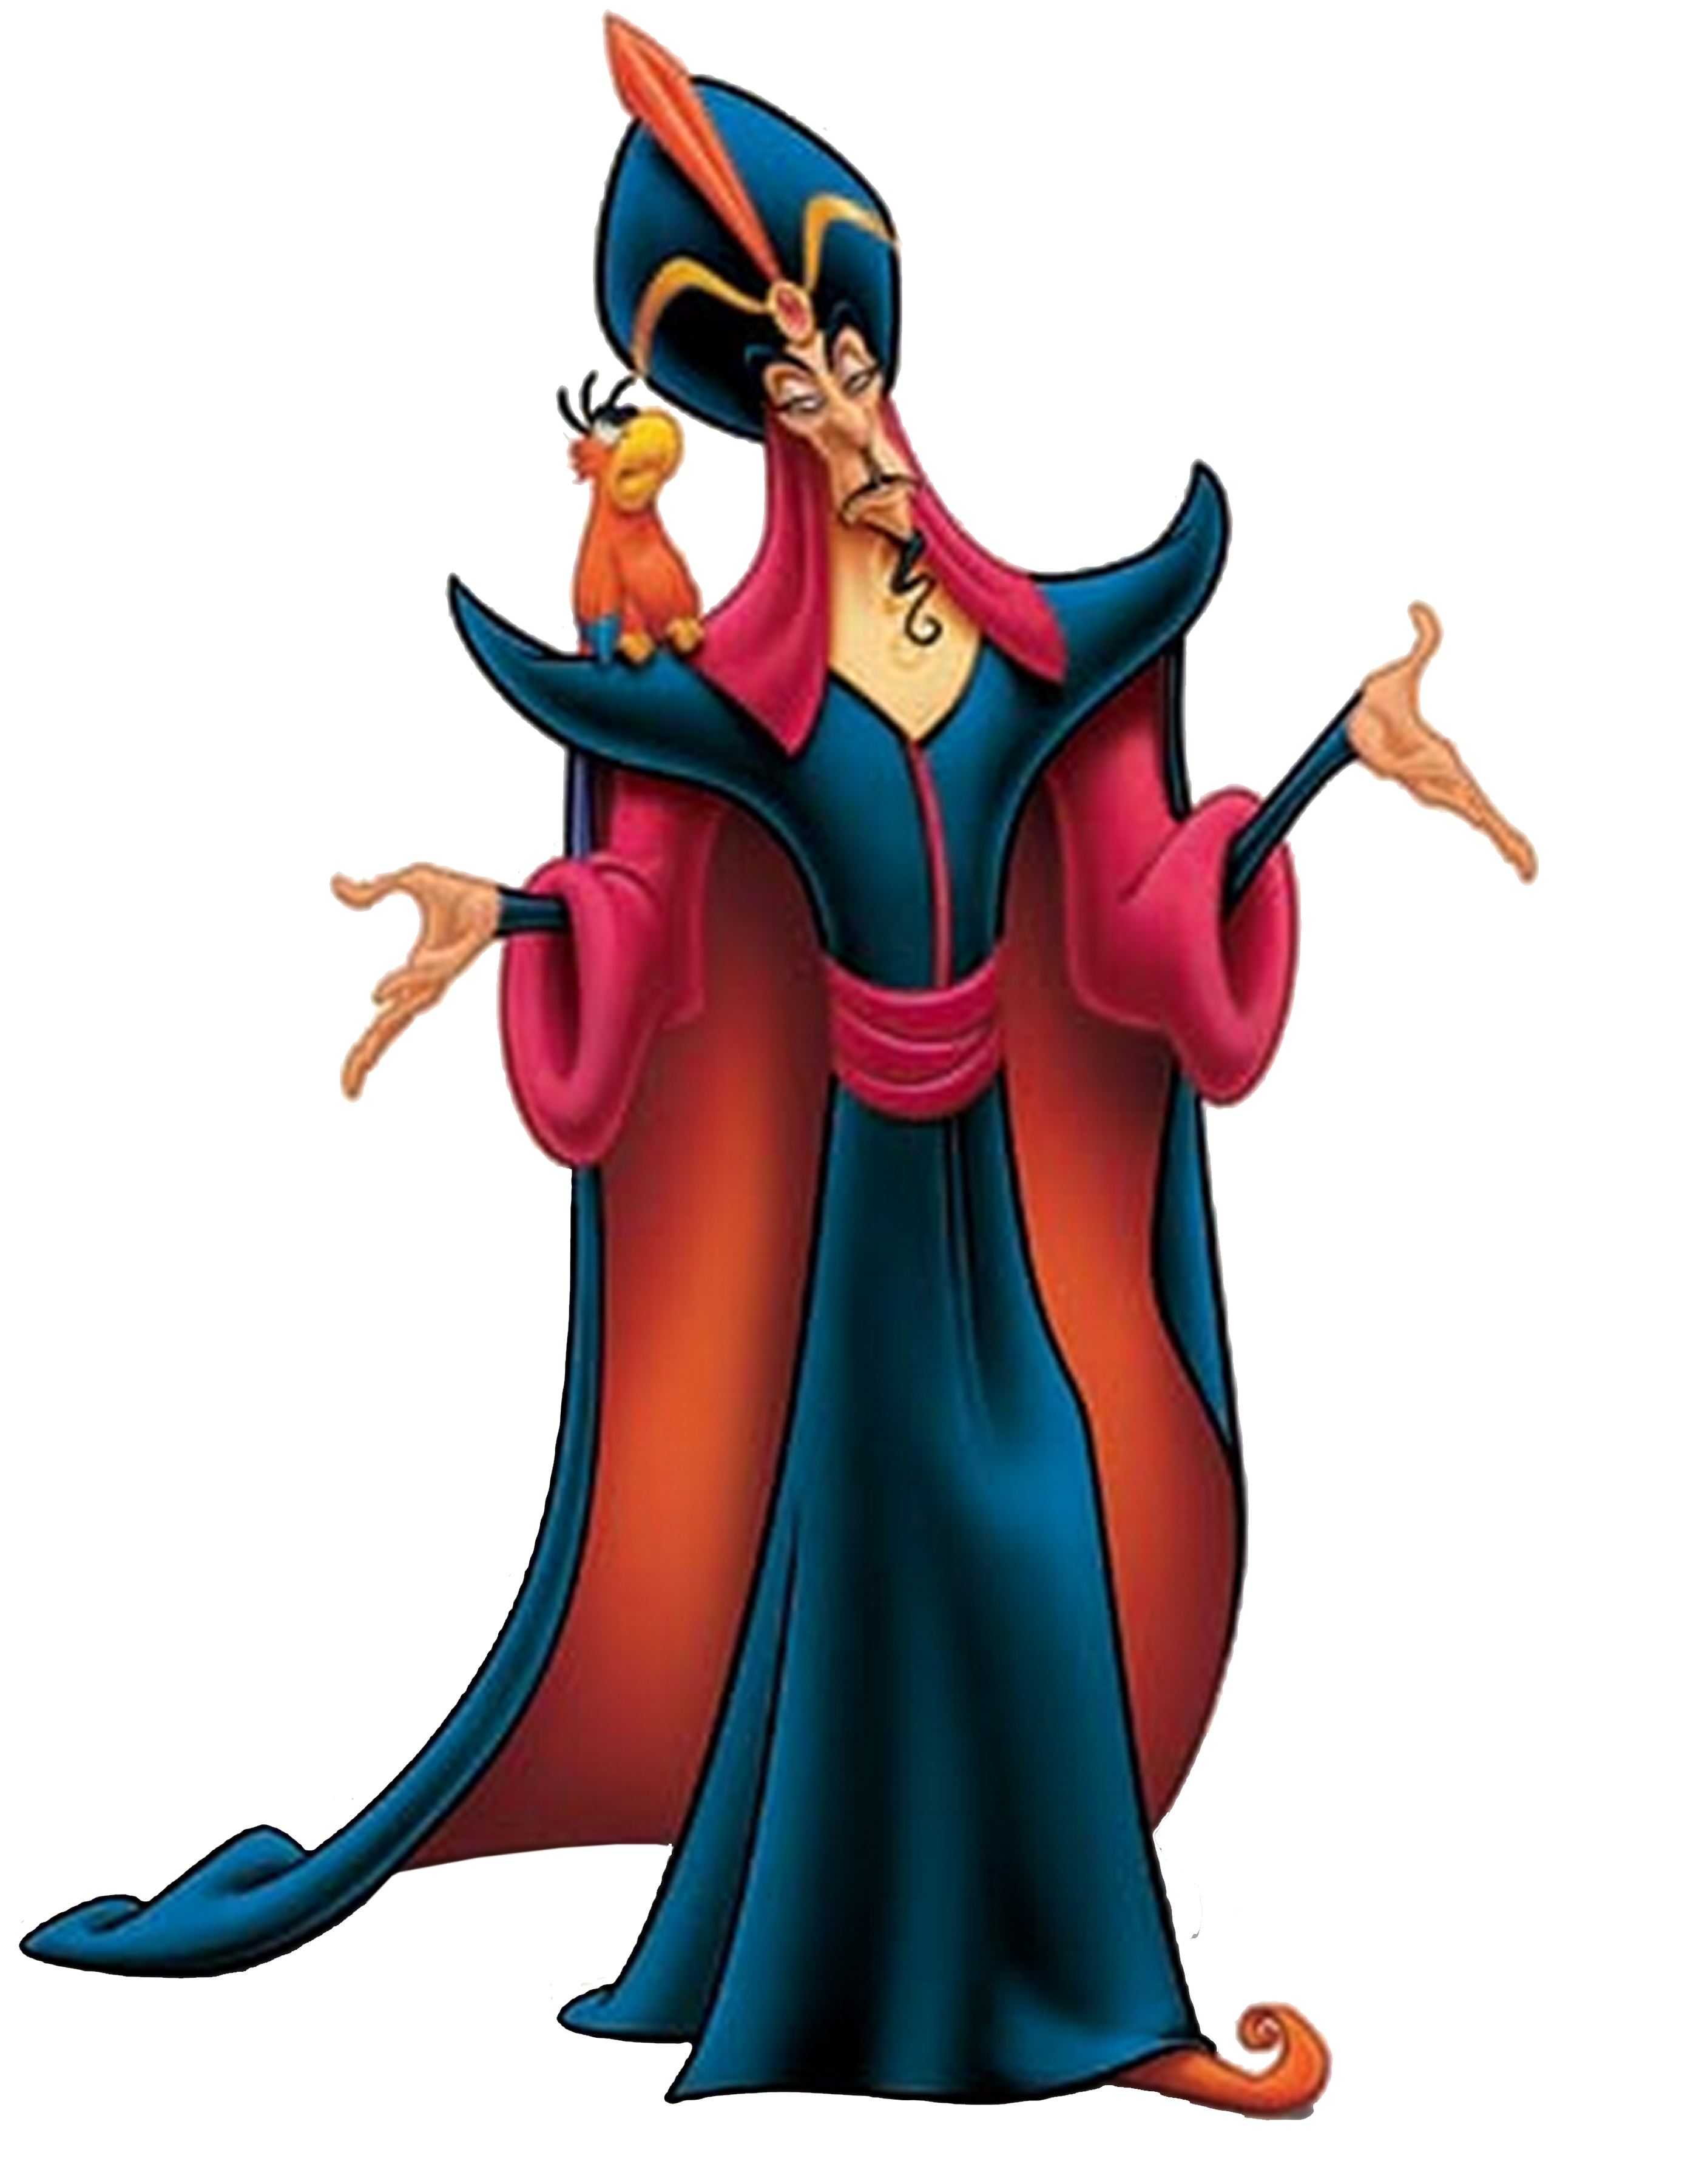 Jafar's Role in Disney's Aladdin